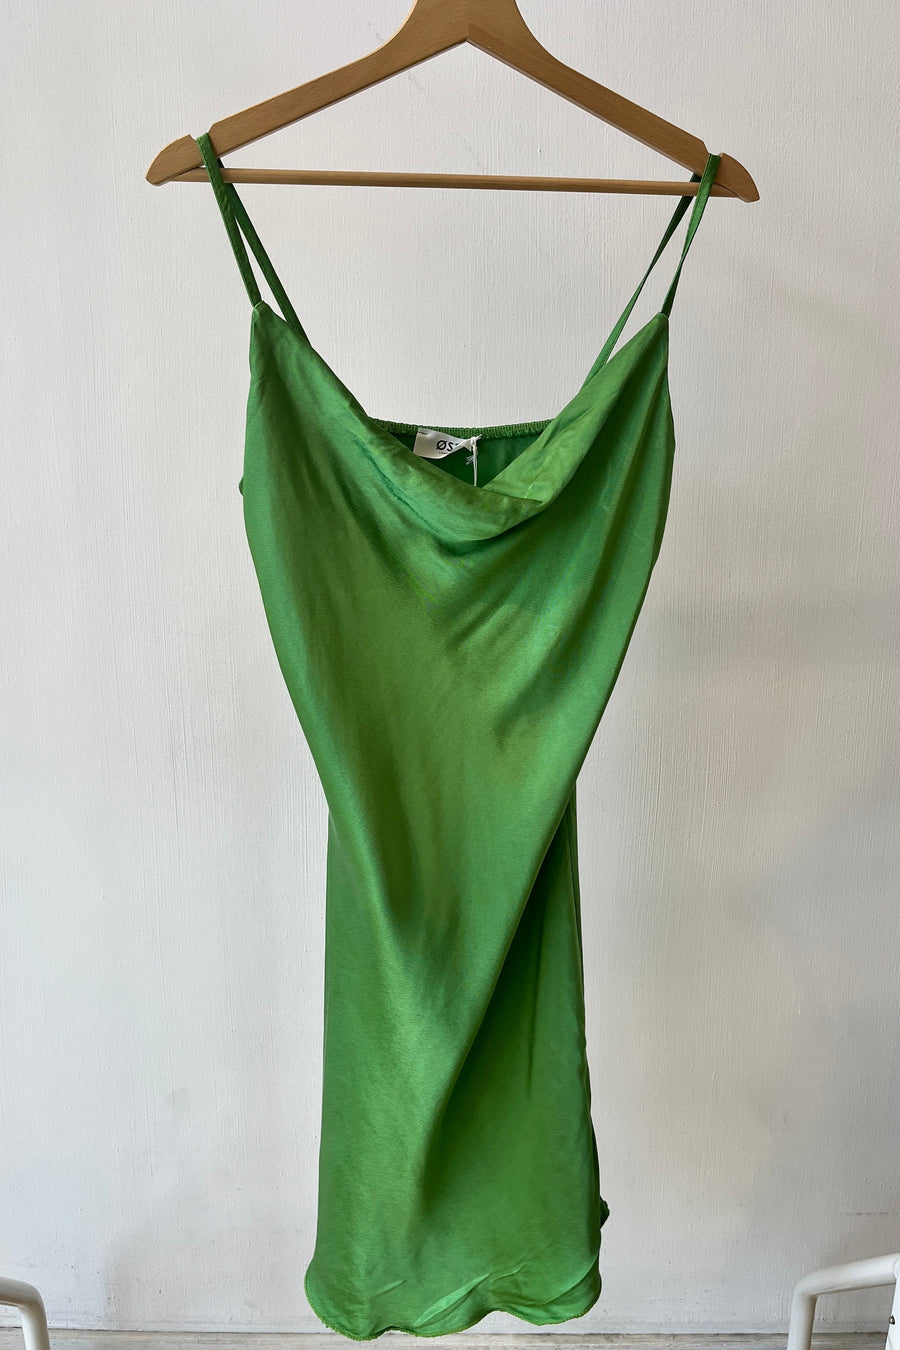 Green slip dress